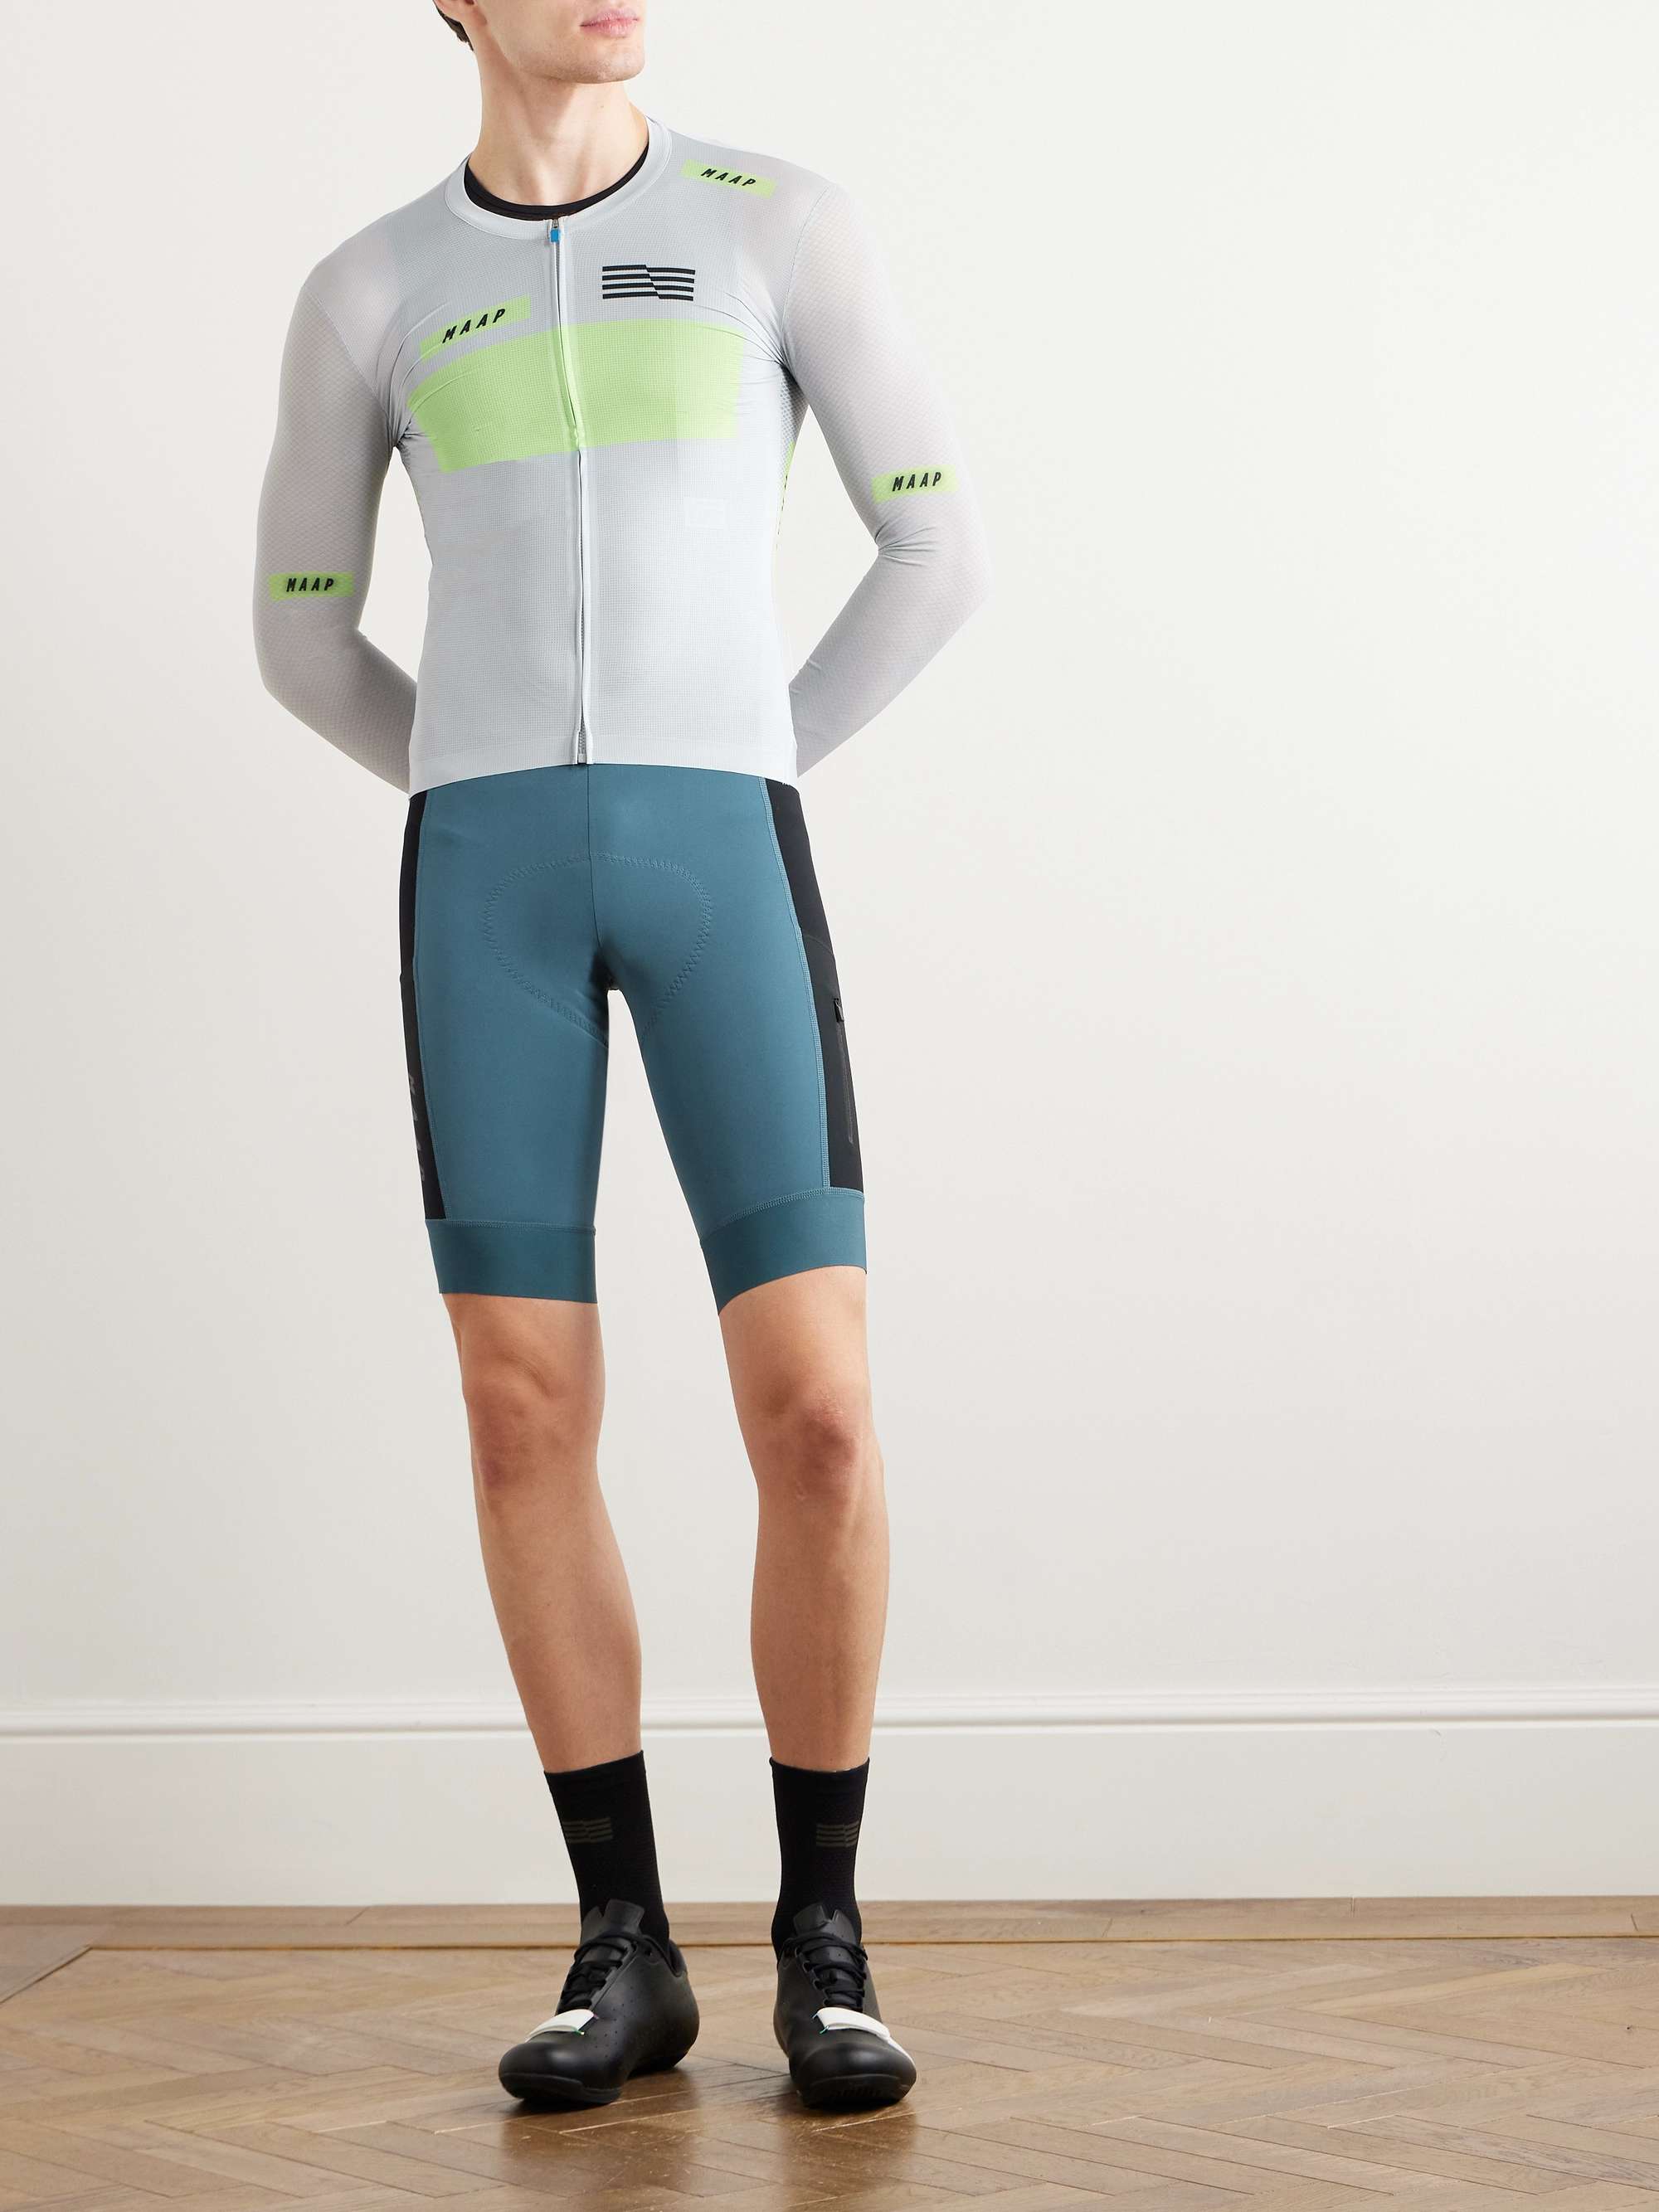 MAAP Alt_Road Cardo Stretch Cycling Bib Shorts for Men | MR PORTER